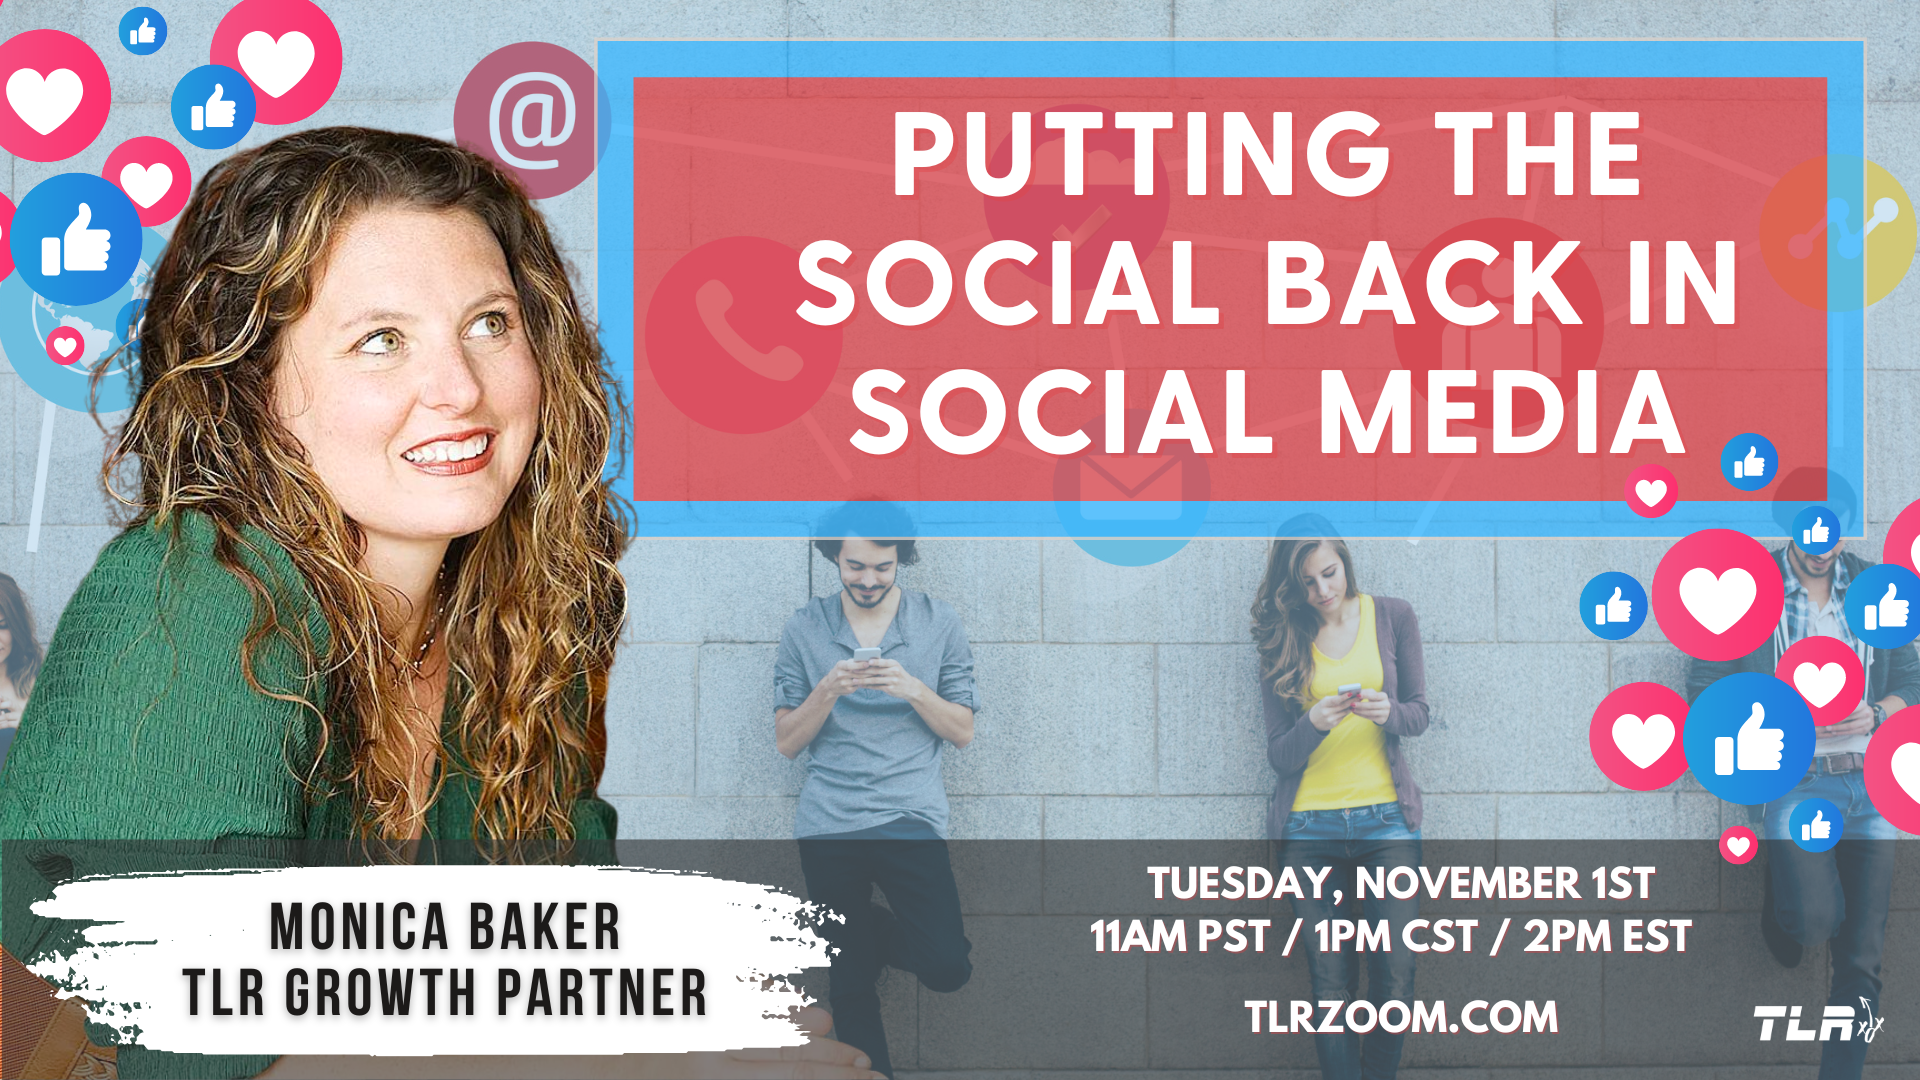 
TLR: Putting the Social Back in Social Media